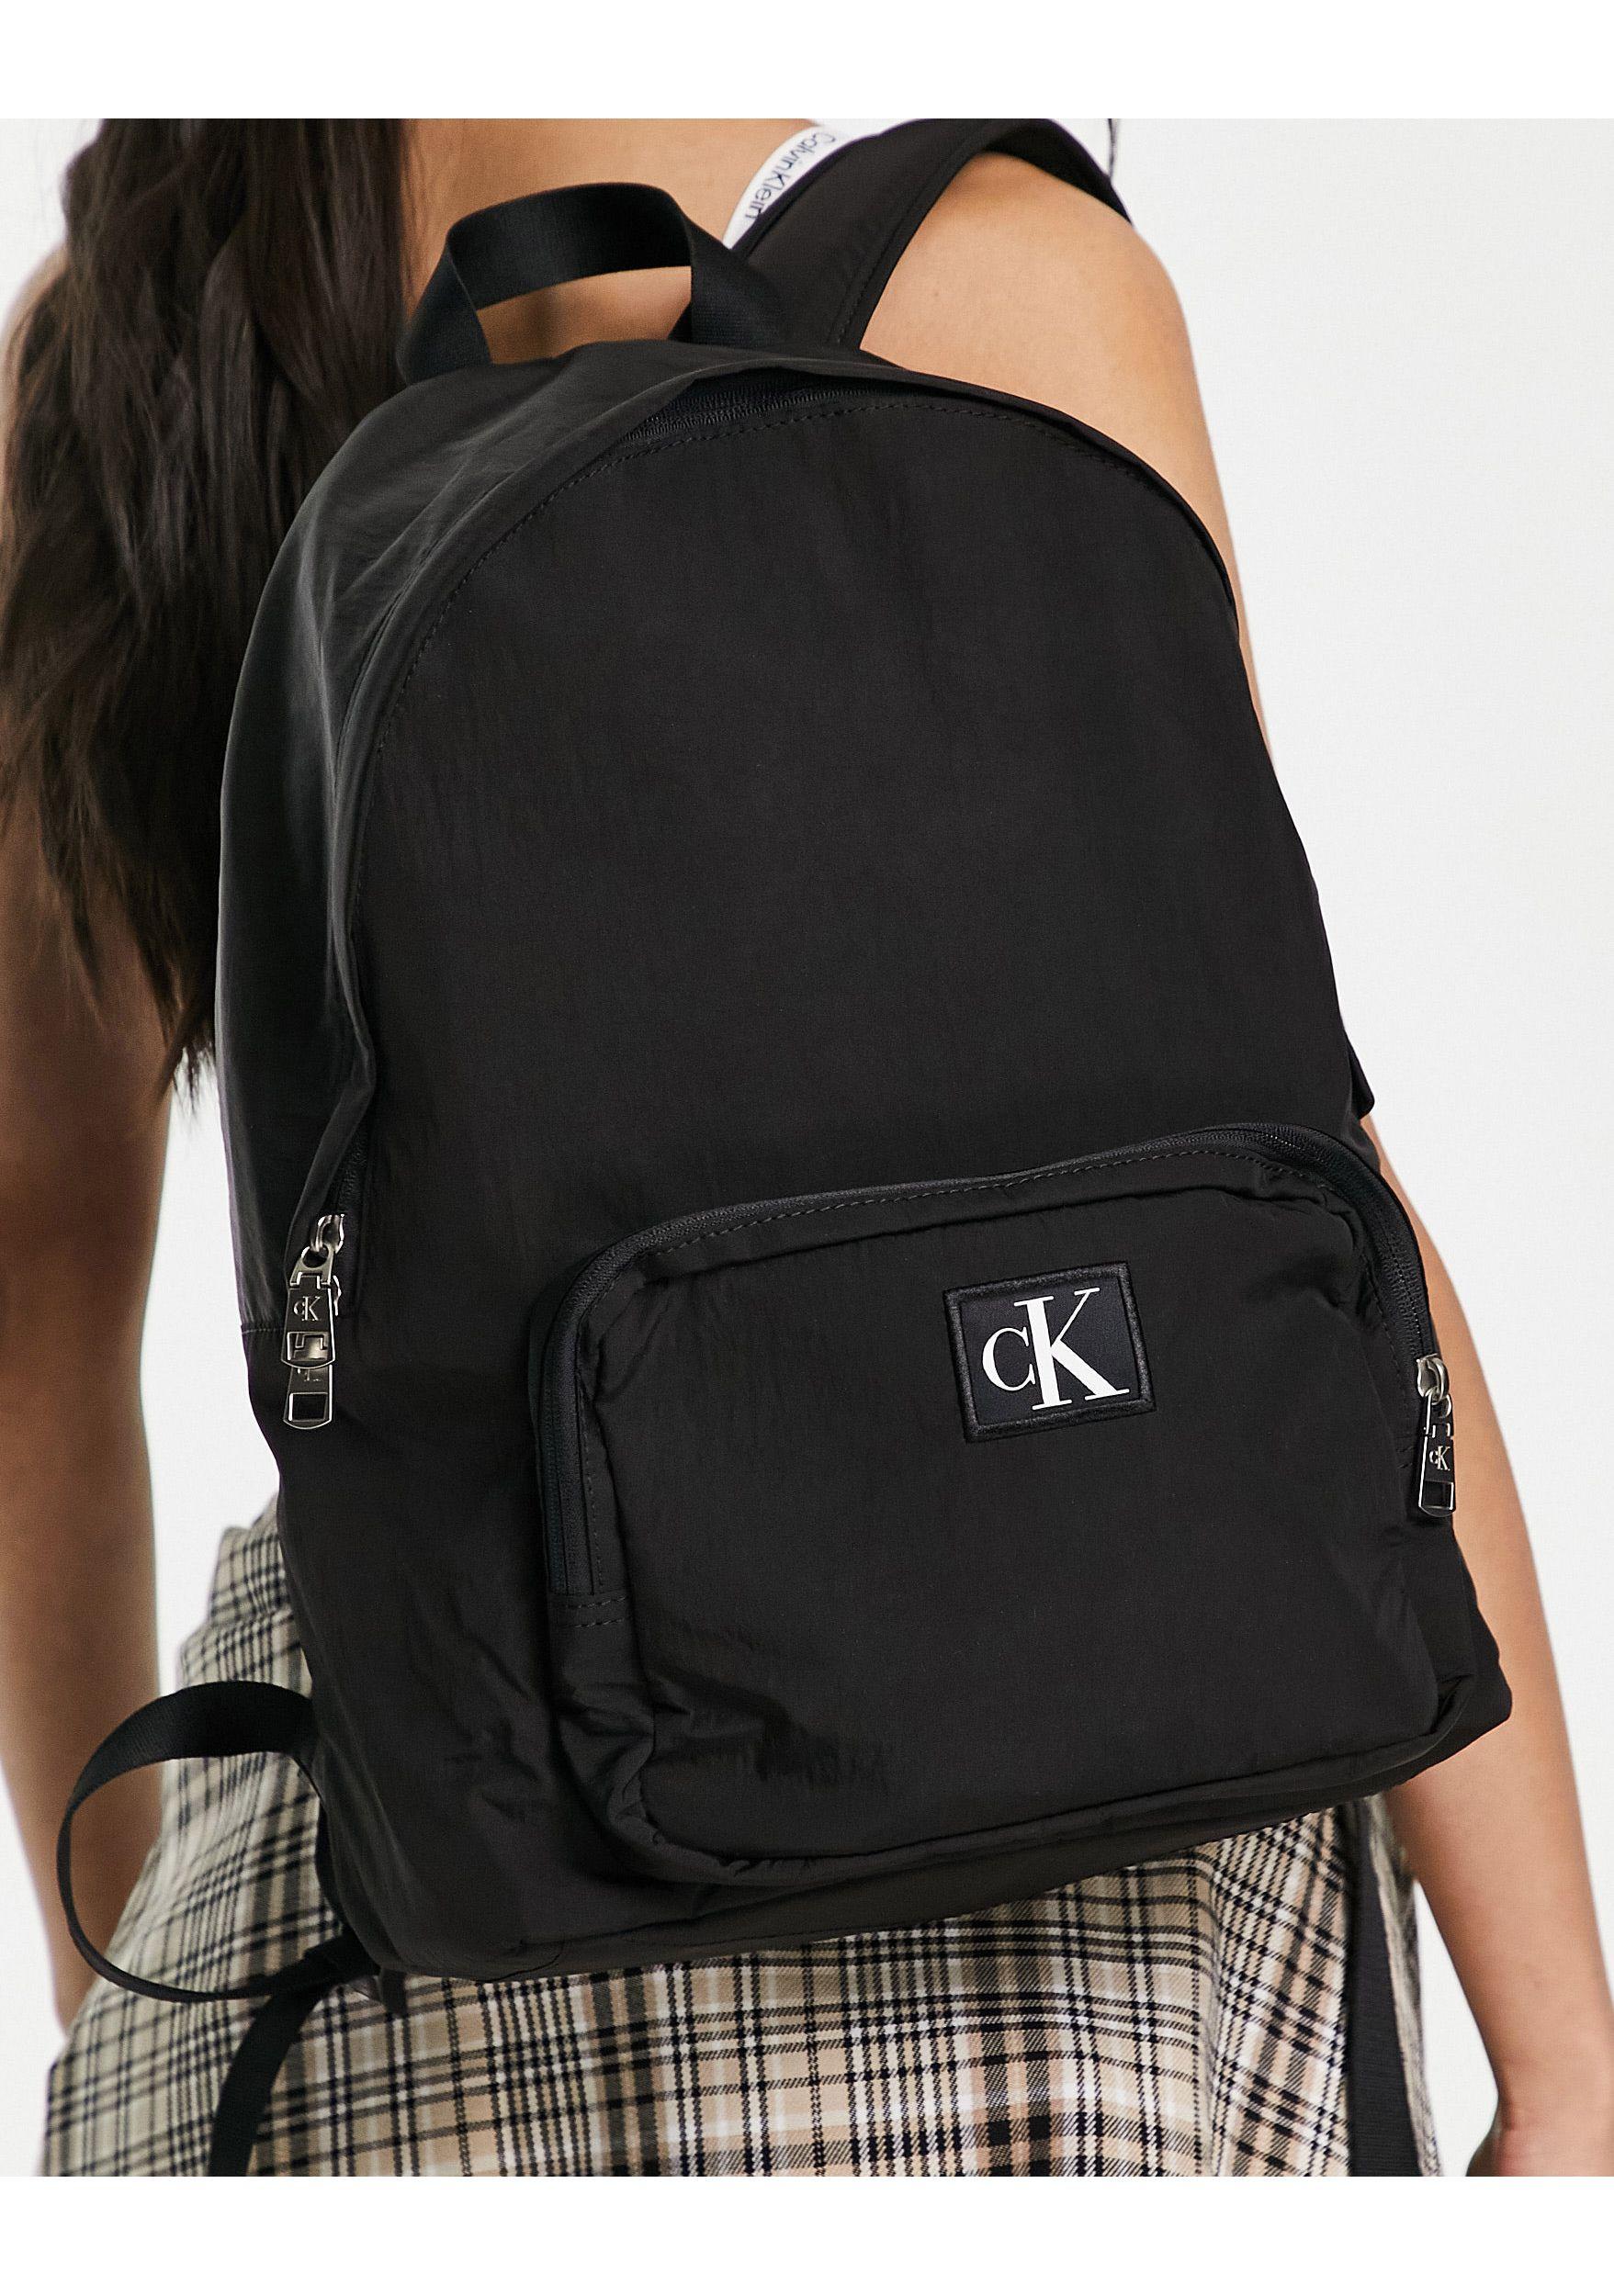 Calvin Klein Jeans Monogram Logo Nylon Backpack in Black